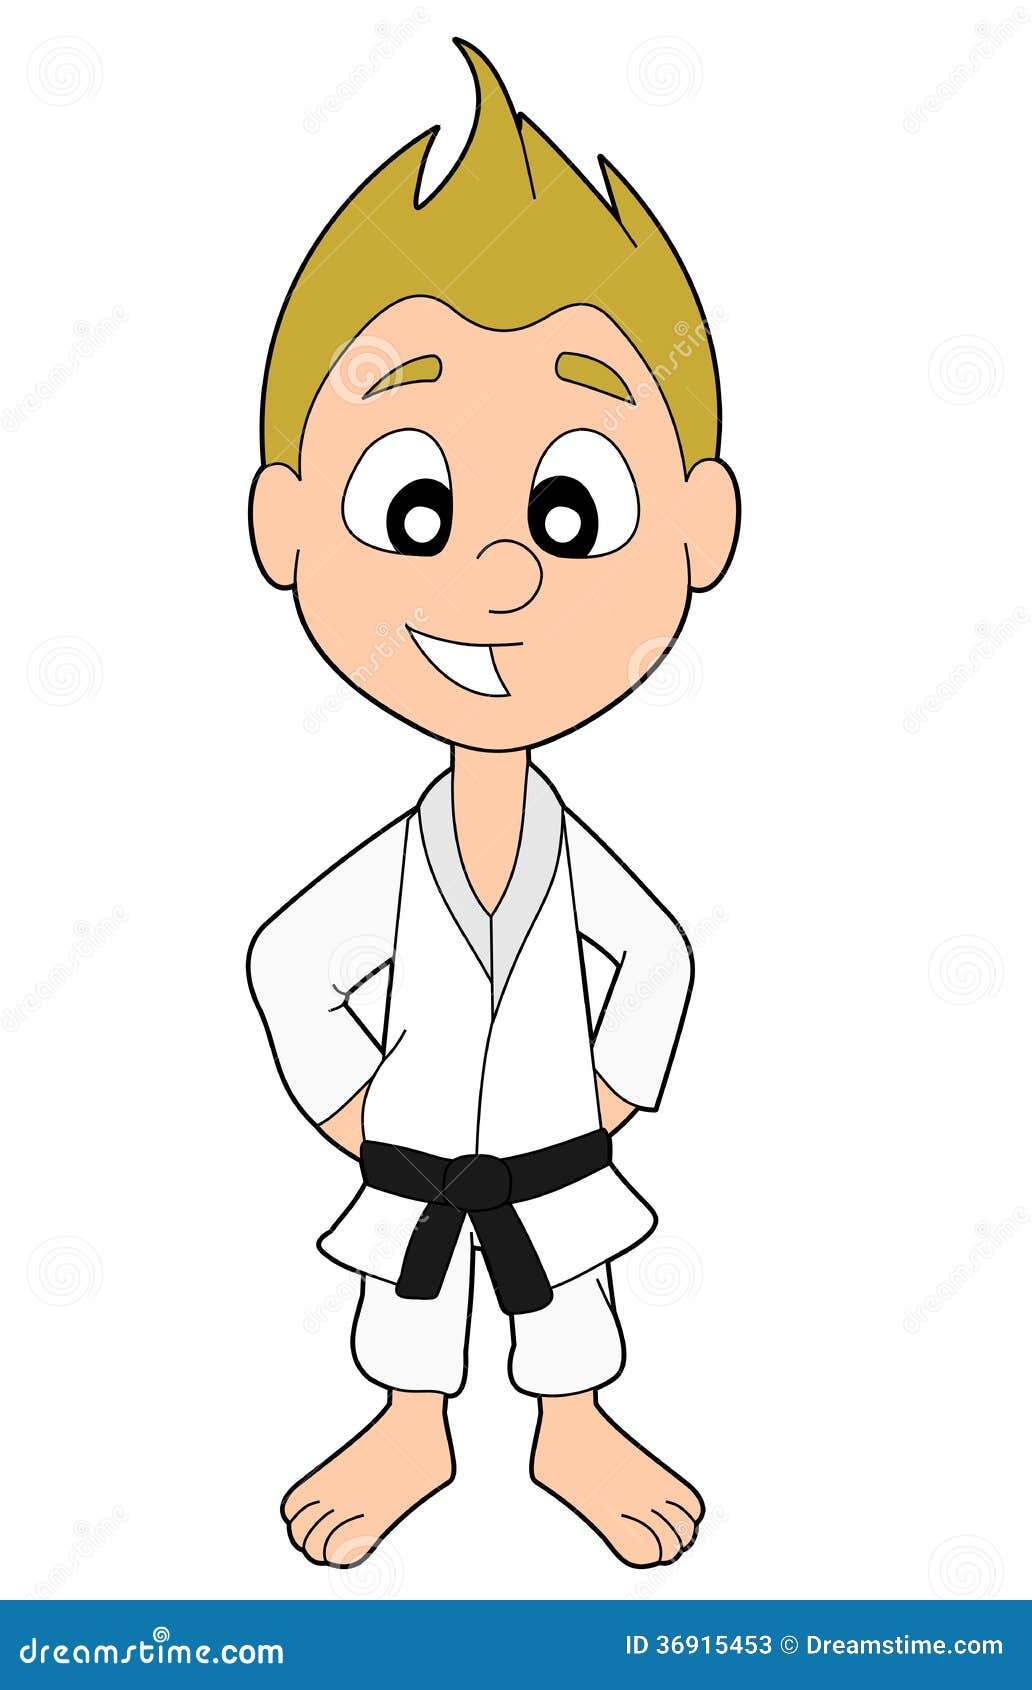 Karate boy cartoon stock illustration. Illustration of happy - 36915453